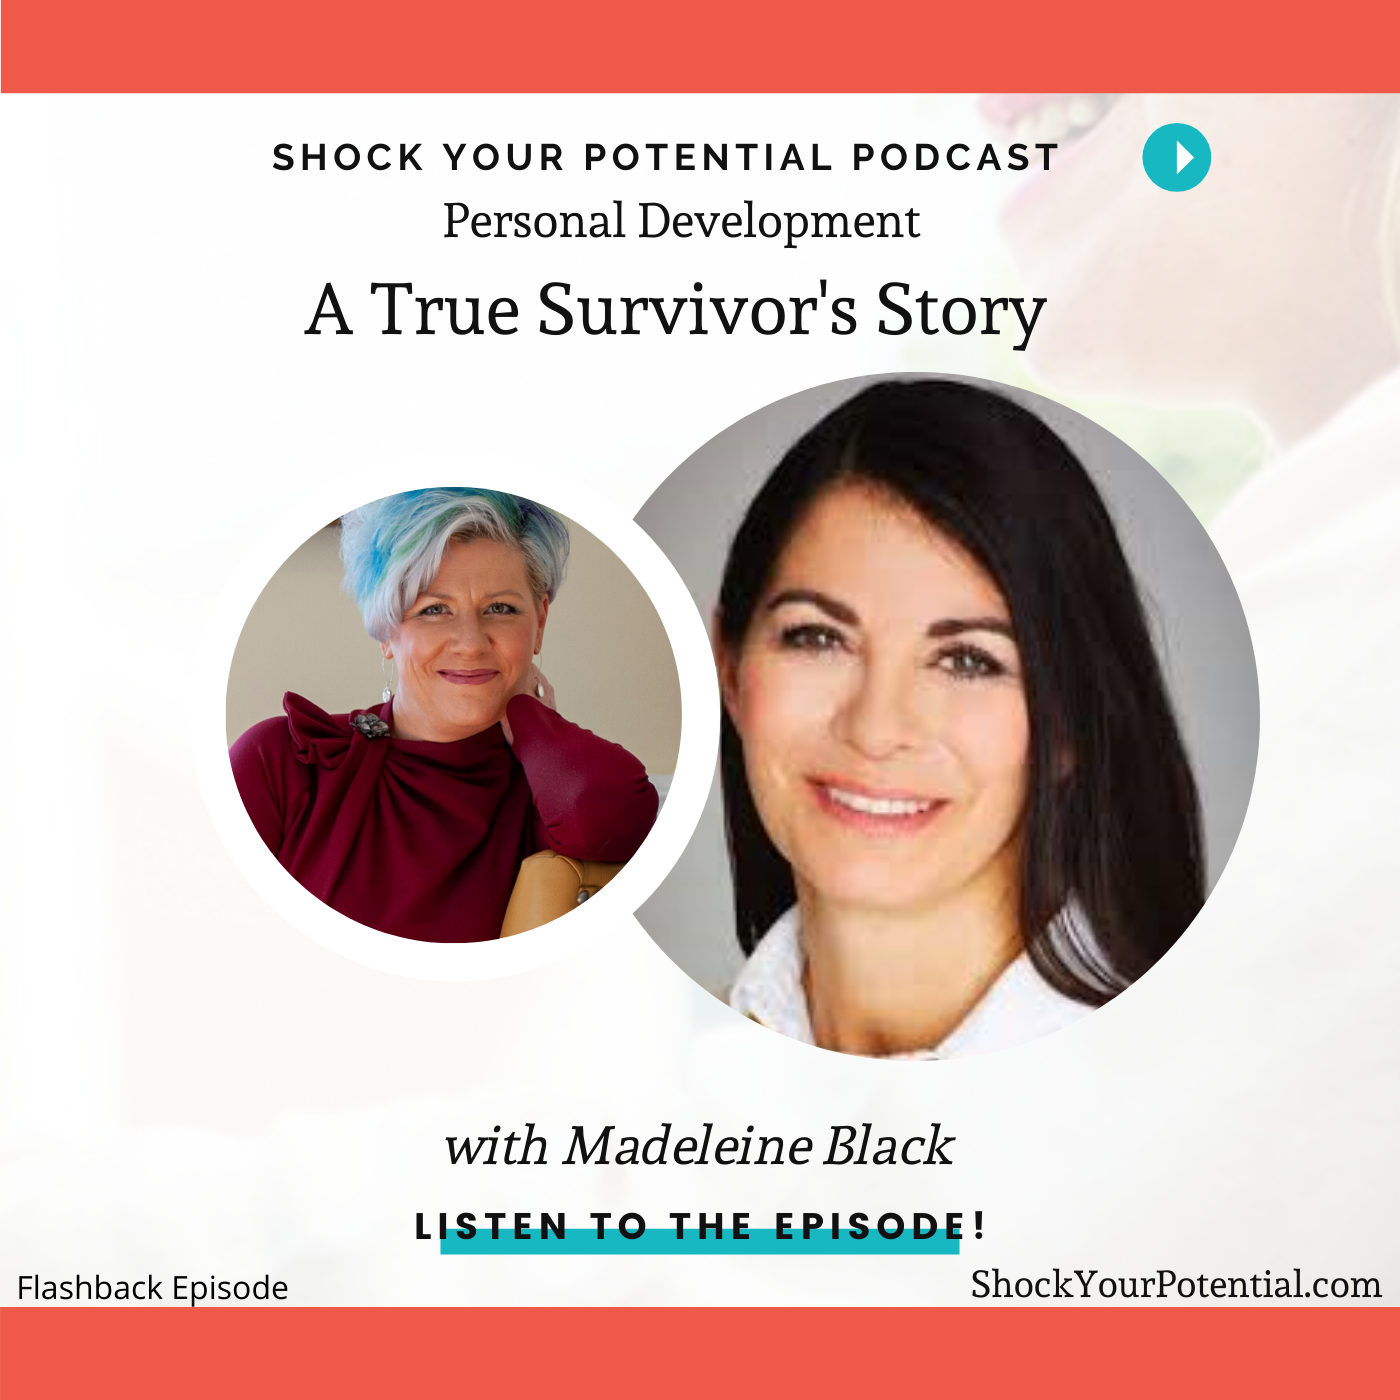 A True Survivor’s Story – Madeleine Black